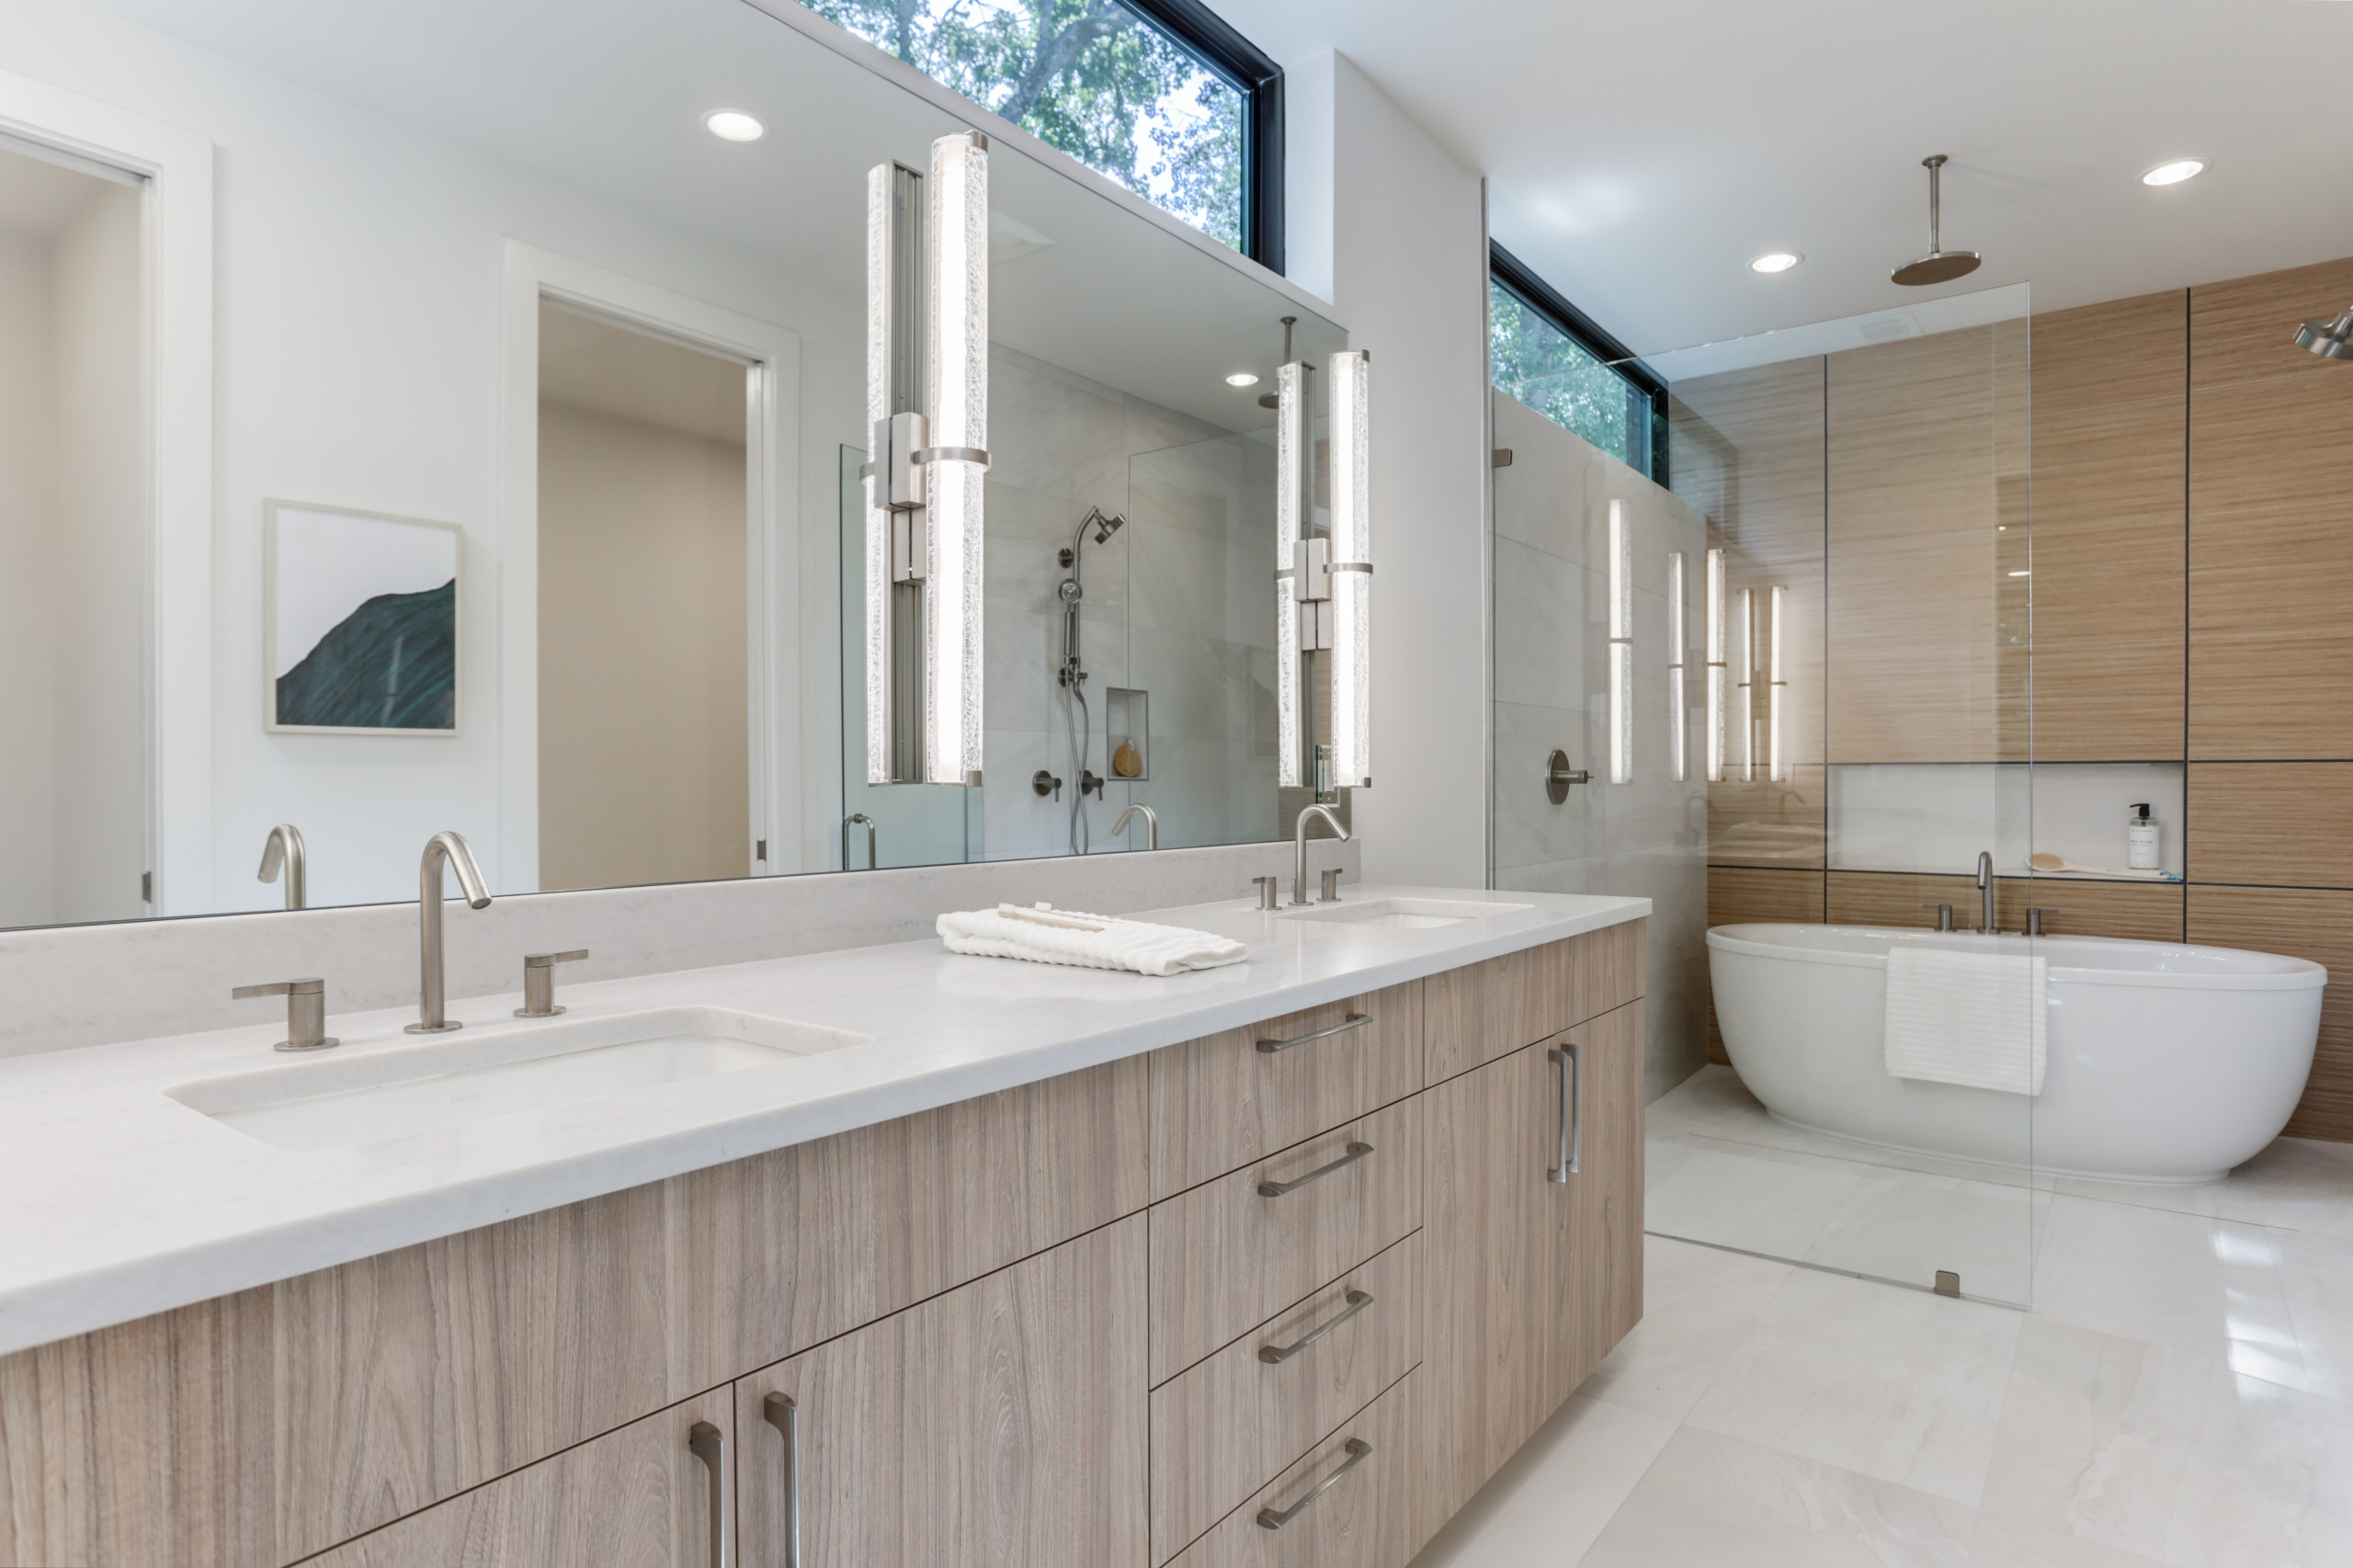 75 Wood Look Tile Bathroom Ideas You Ll, Wood Look Tile Shower Ideas